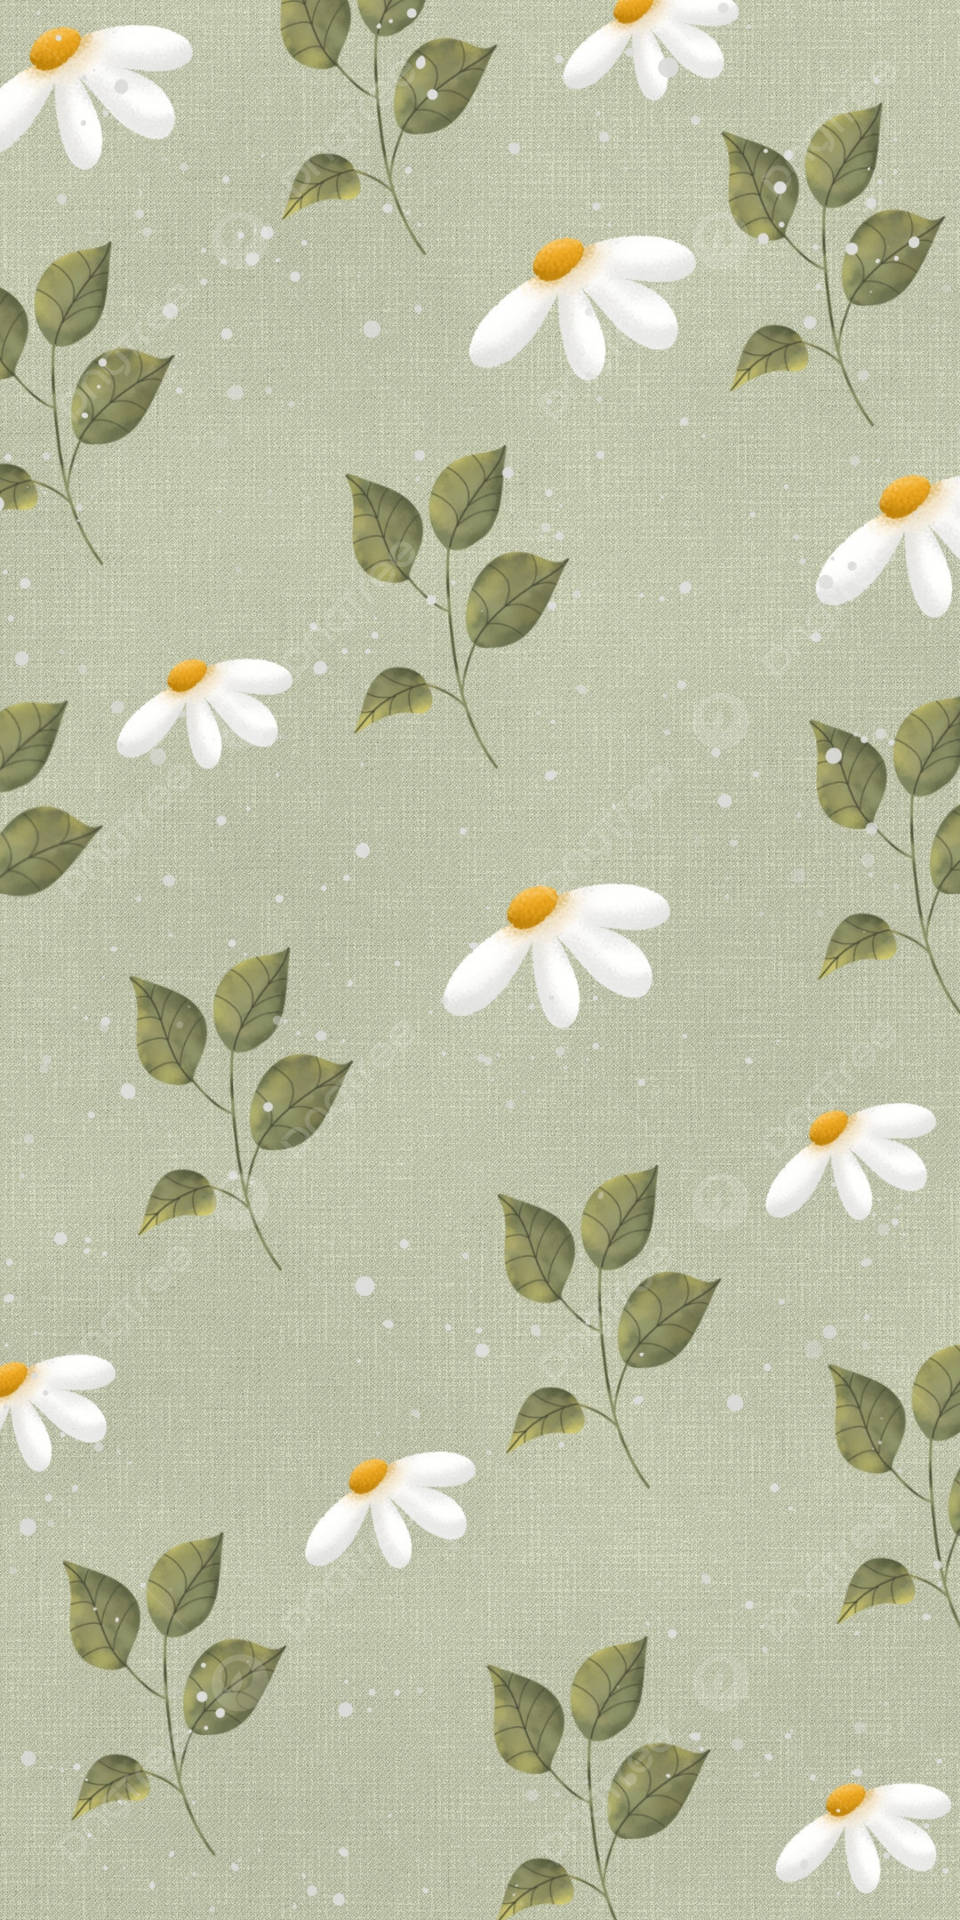 Download Floral Half Daisy Phone Wallpaper | Wallpapers.com